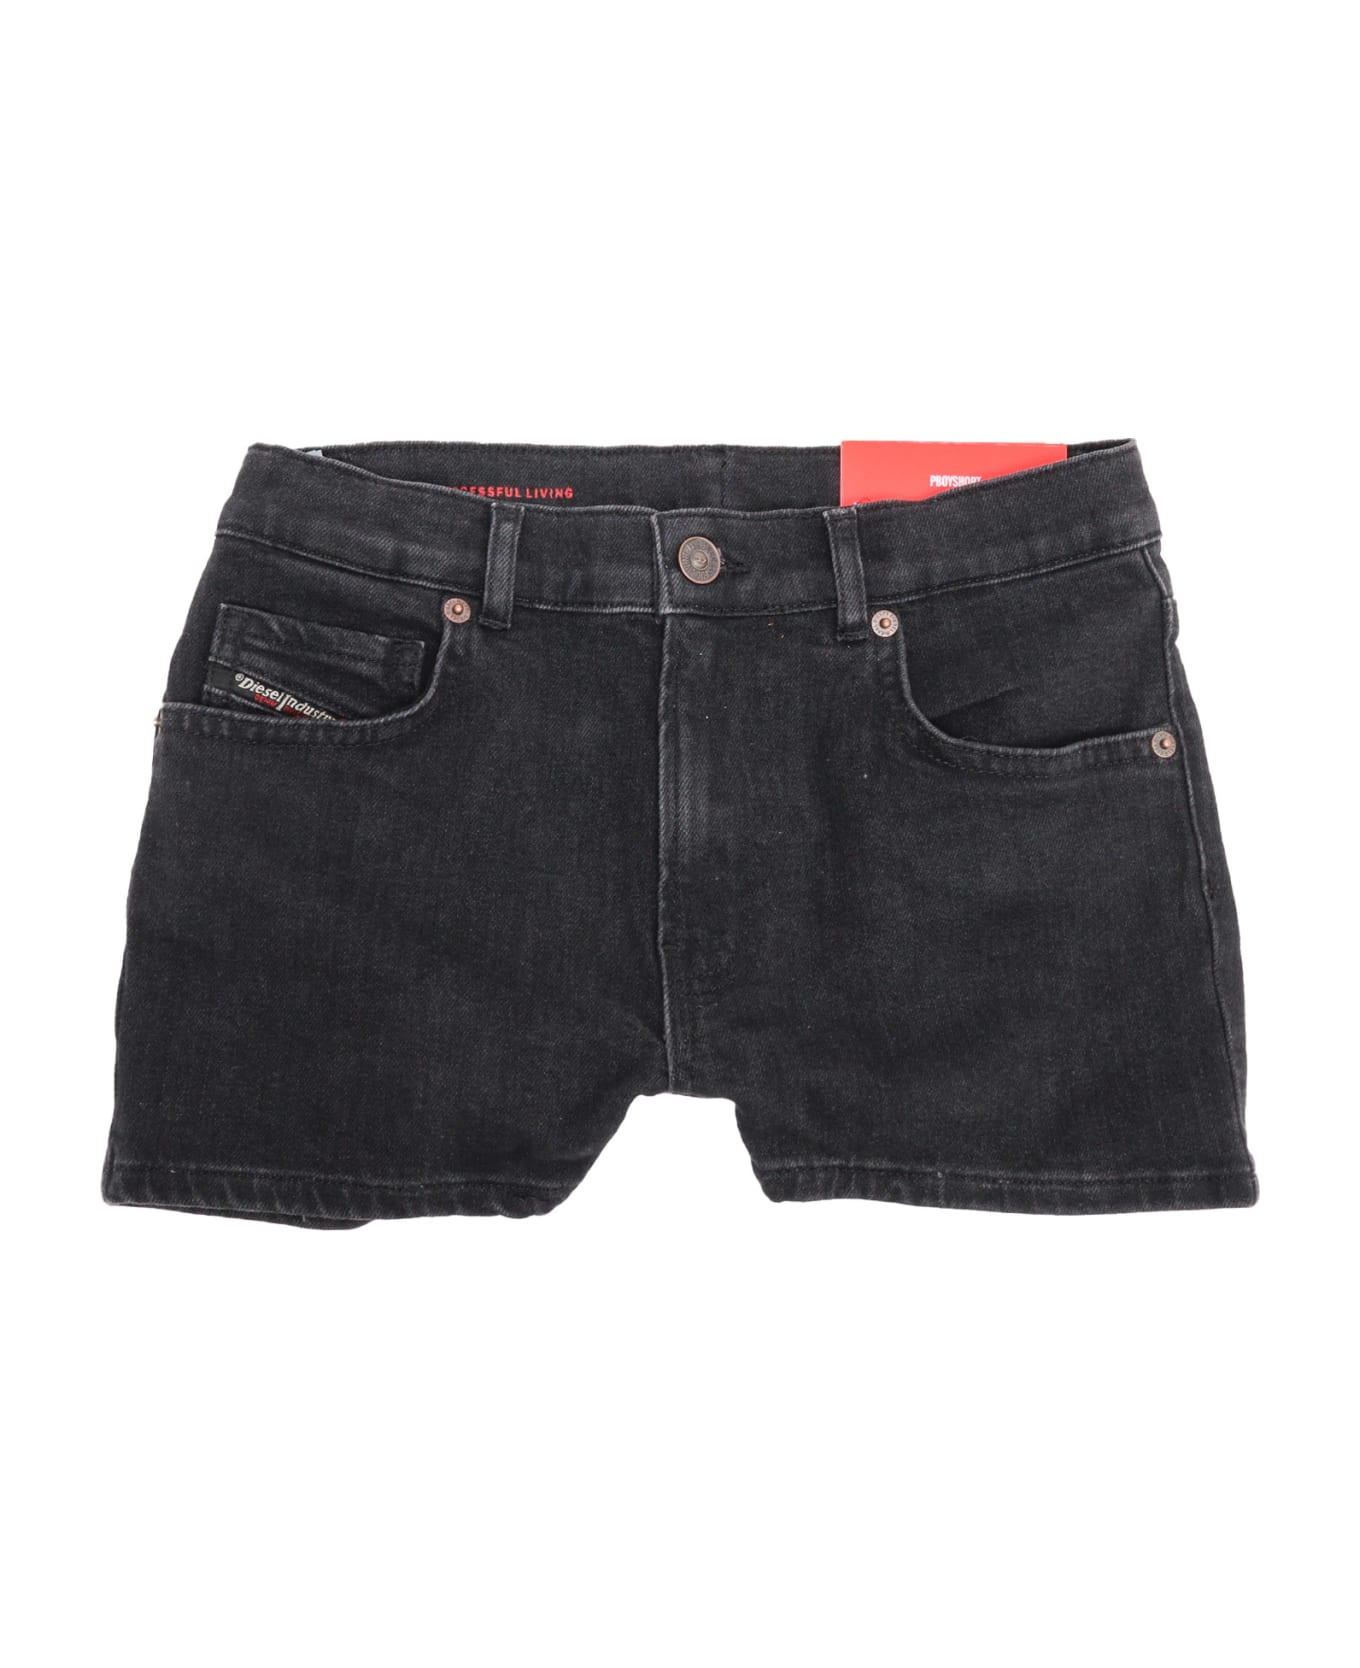 Diesel Jeans Shorts For Girls - BLACK